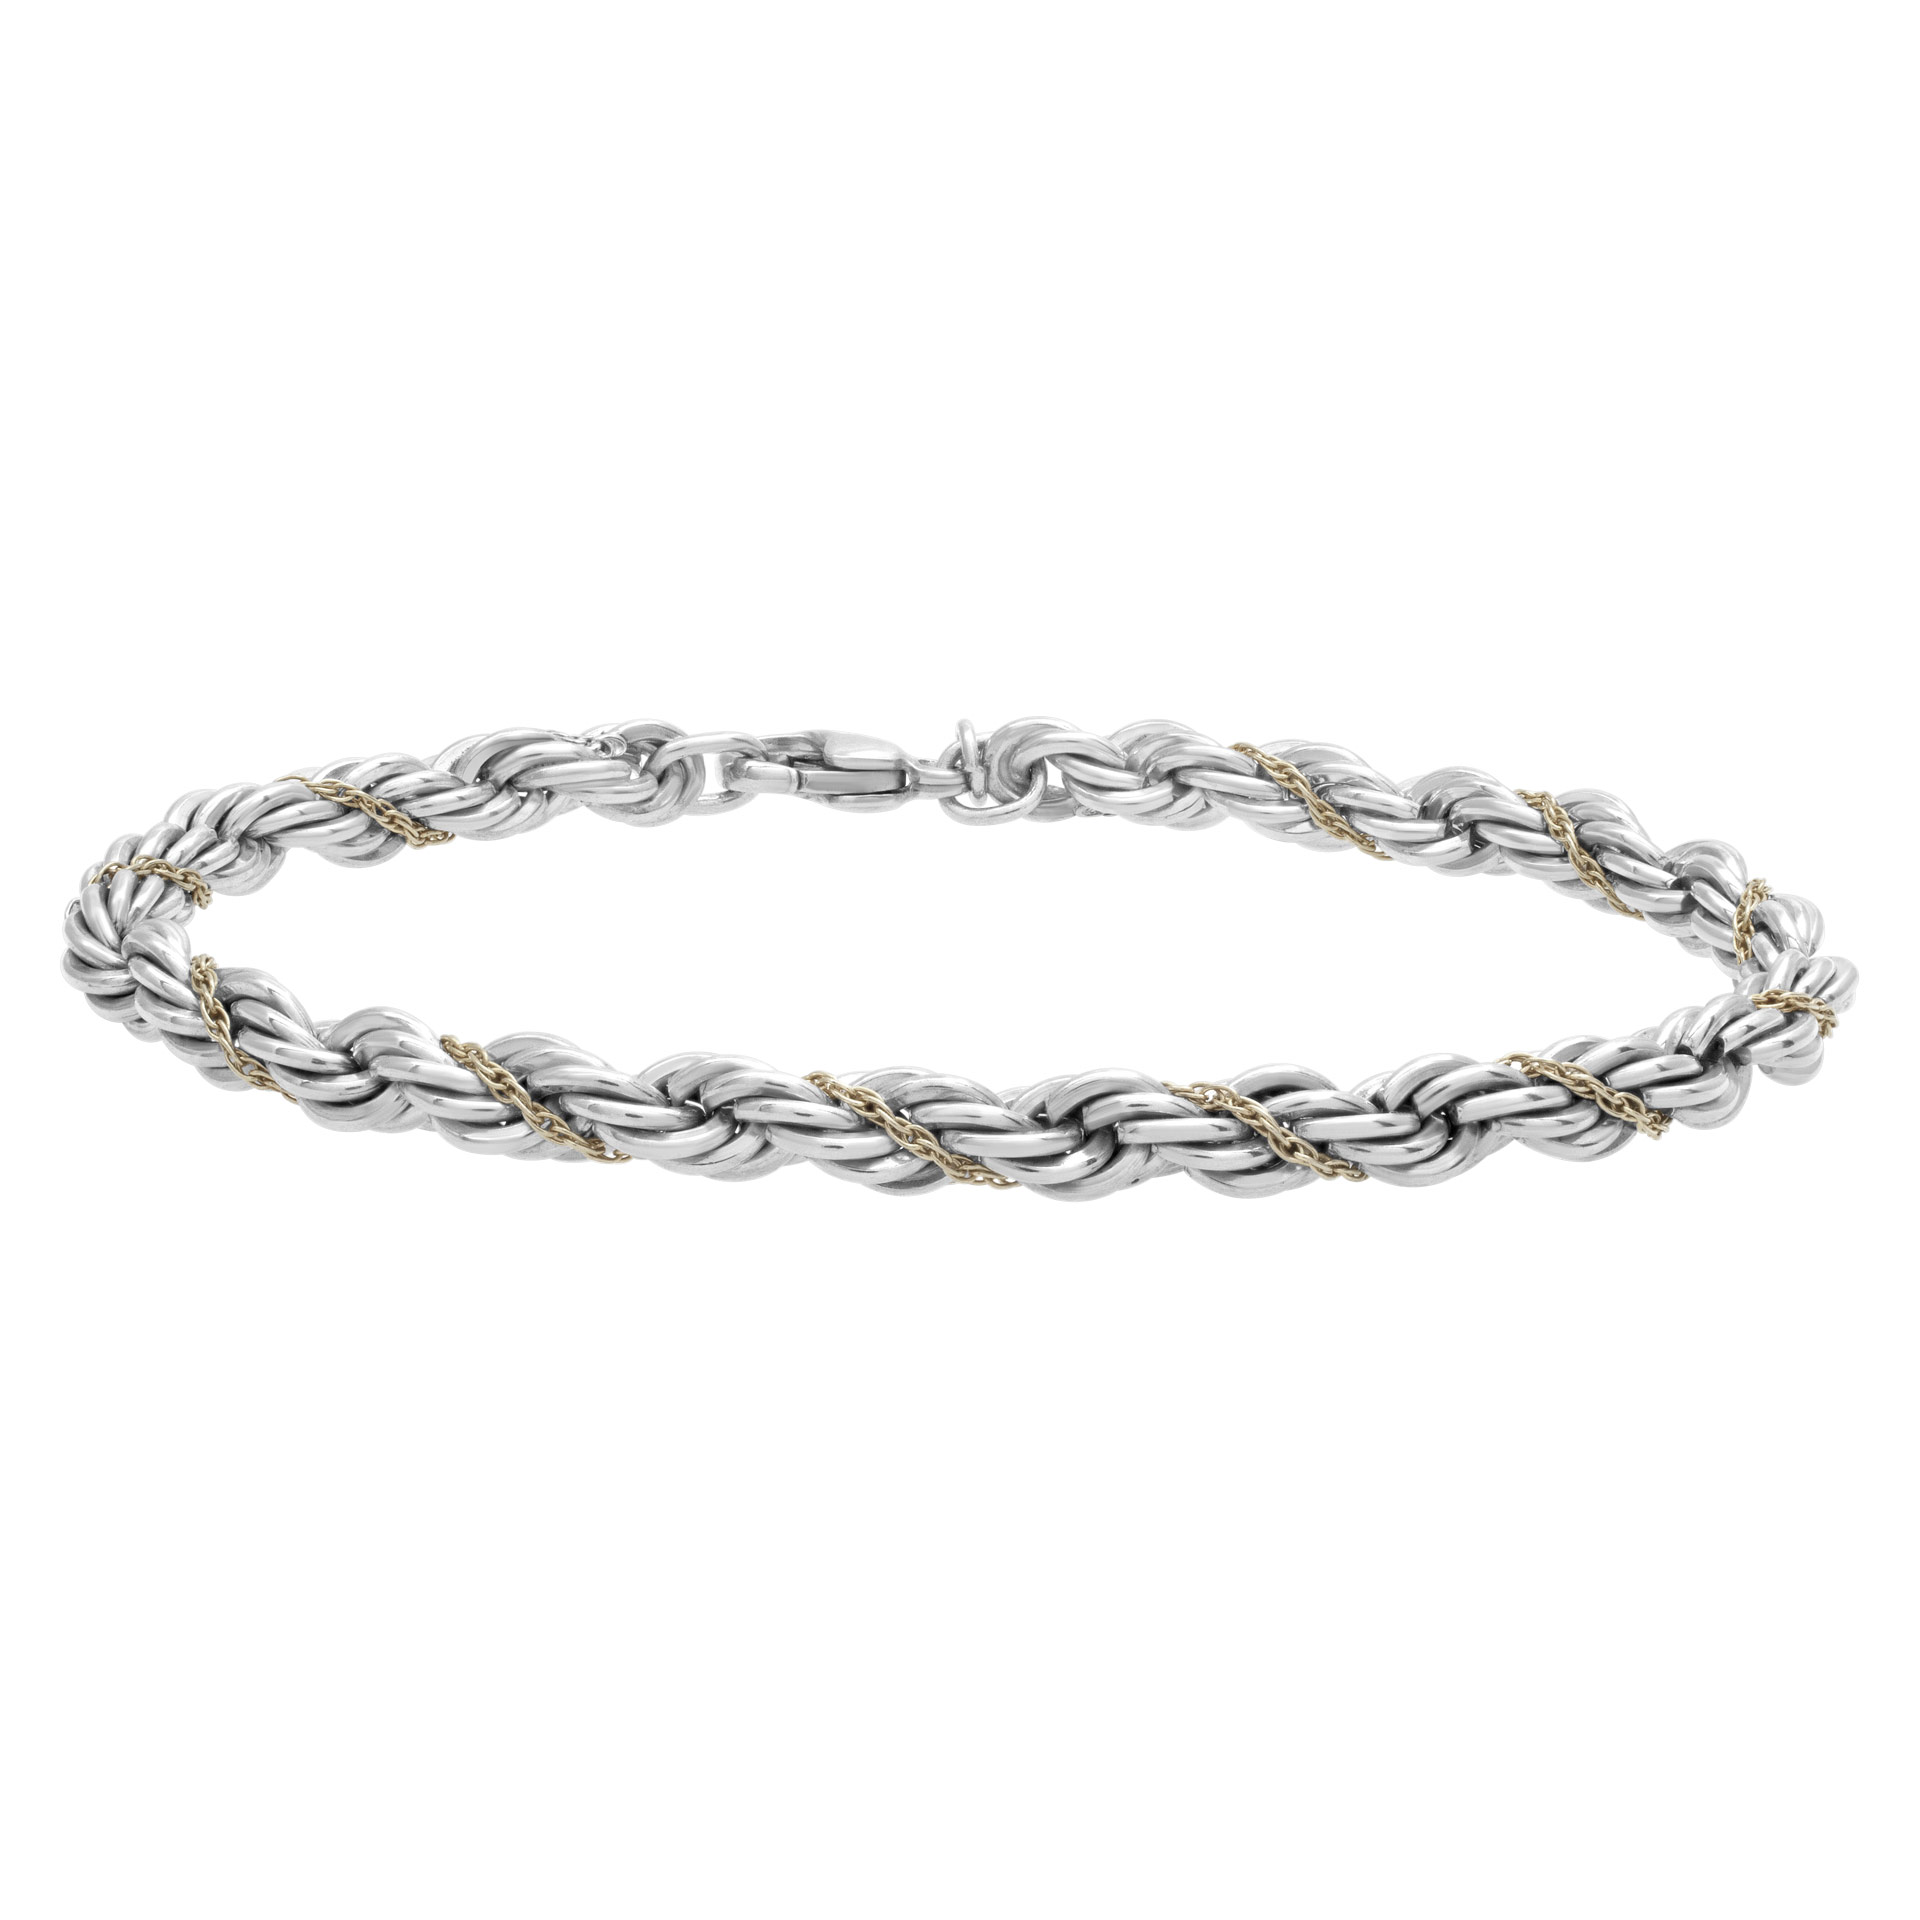 Tiffany & Co. twisted rope bracelet in 18k & sterling silver